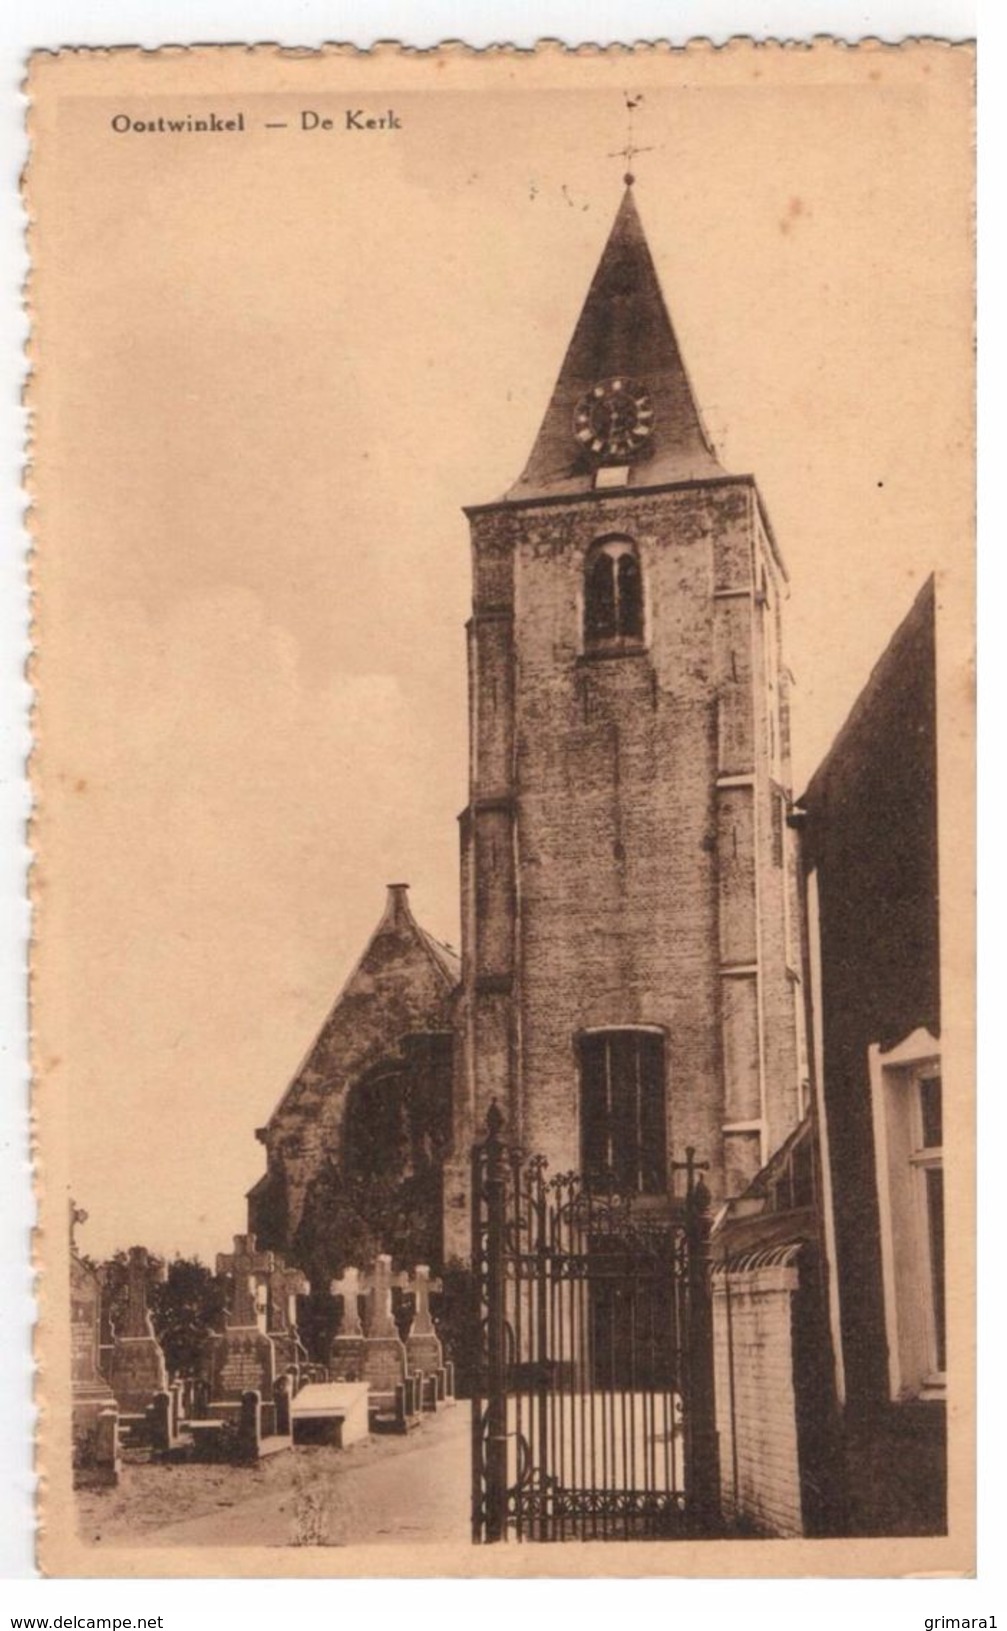 Oostwinkel - De Kerk - Zomergem